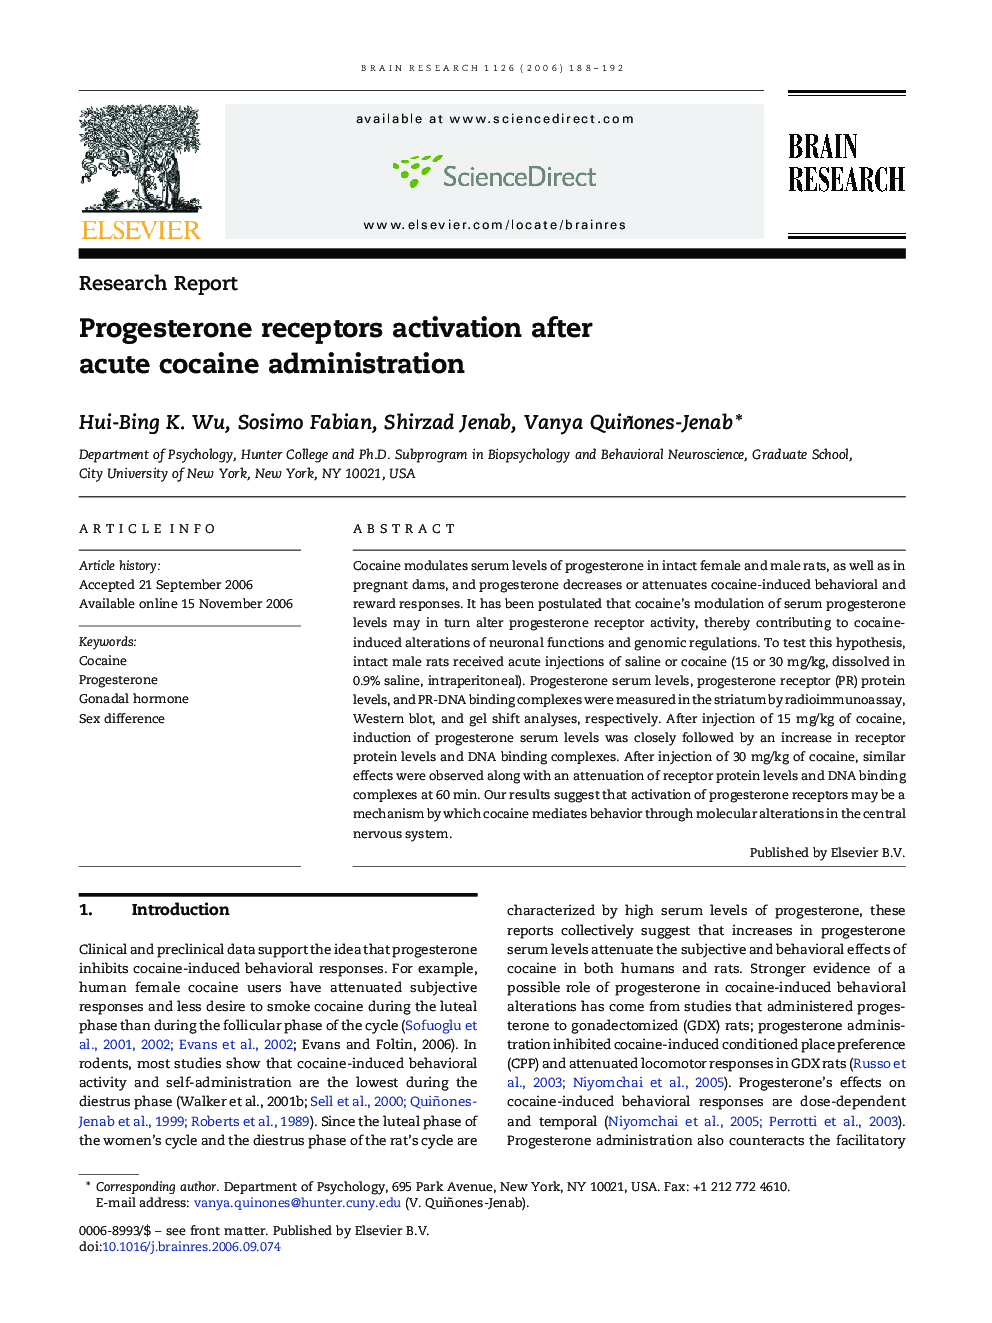 Progesterone receptors activation after acute cocaine administration